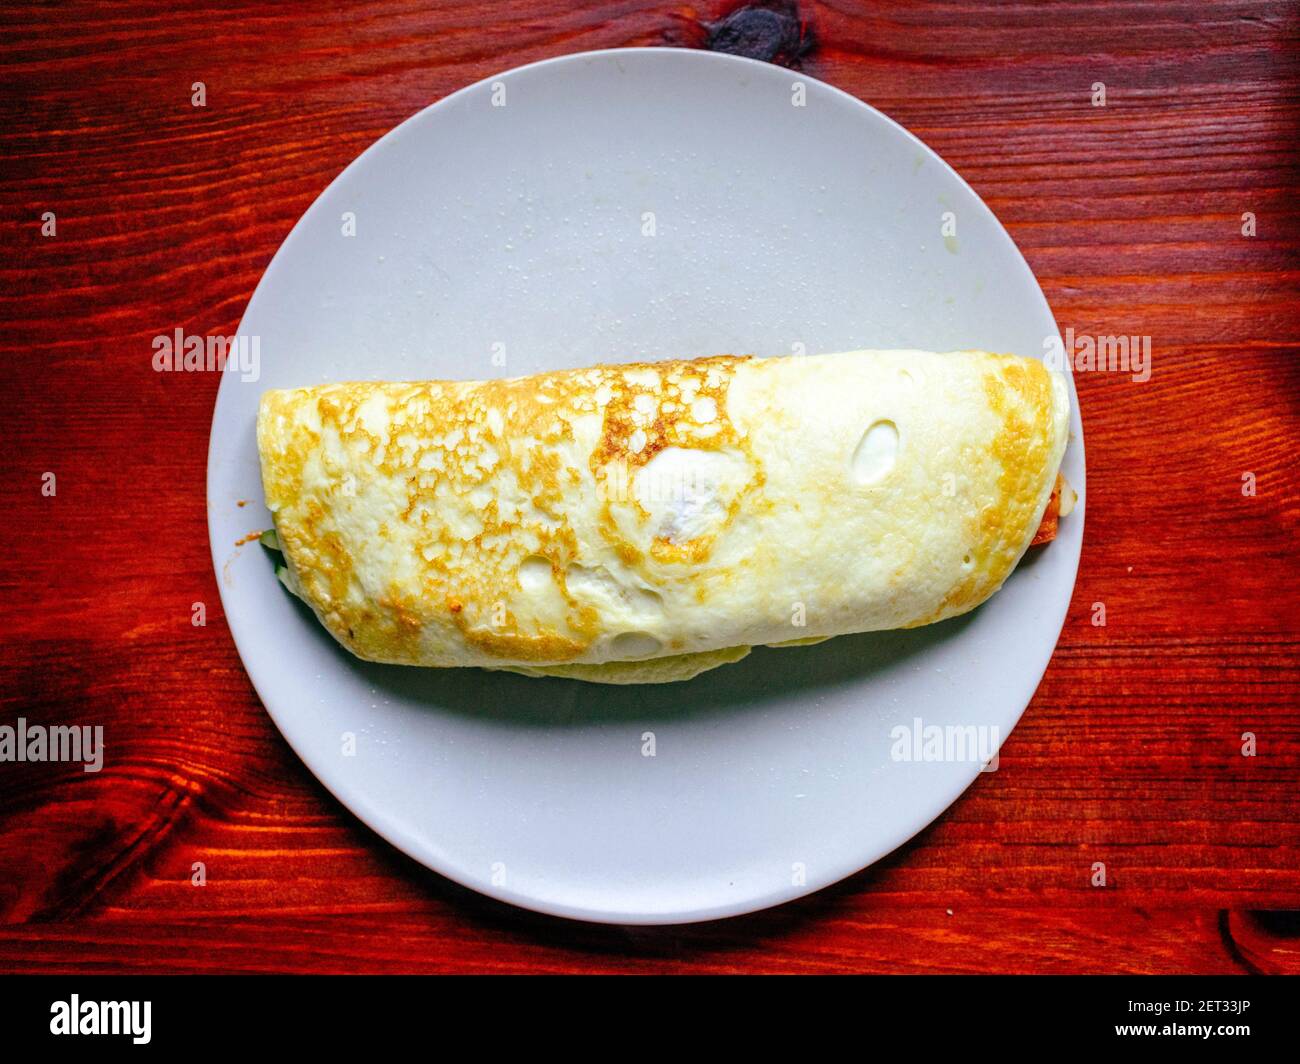 Stuffed omelette Stock Photo